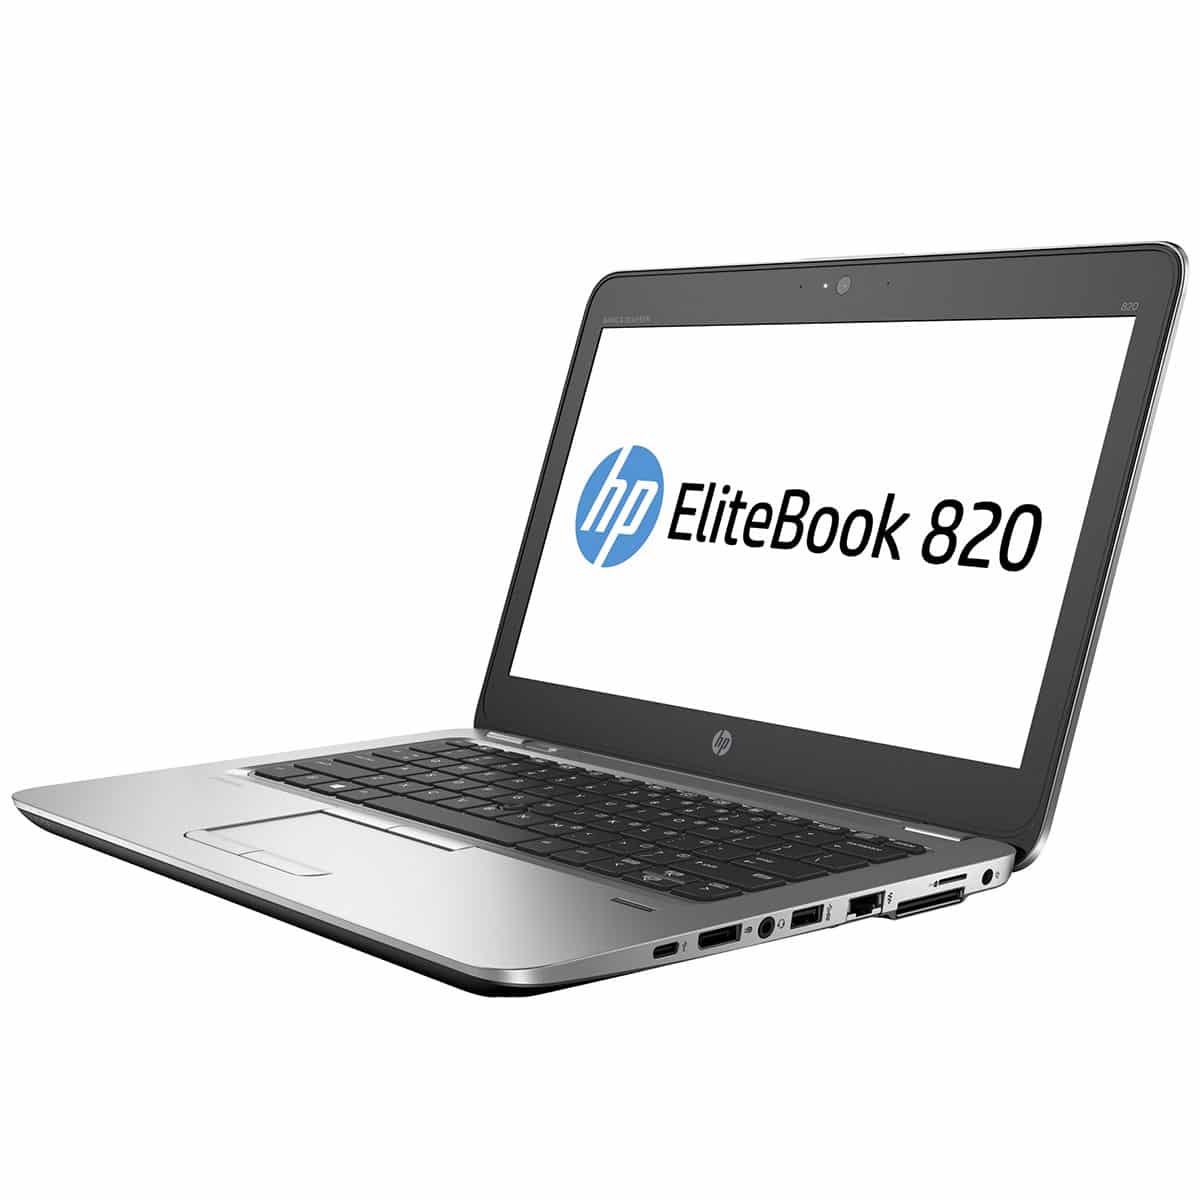 HP EliteBook 820 G4 Notebook PC Intel Core i5 7th Gen 8GB RAM ...